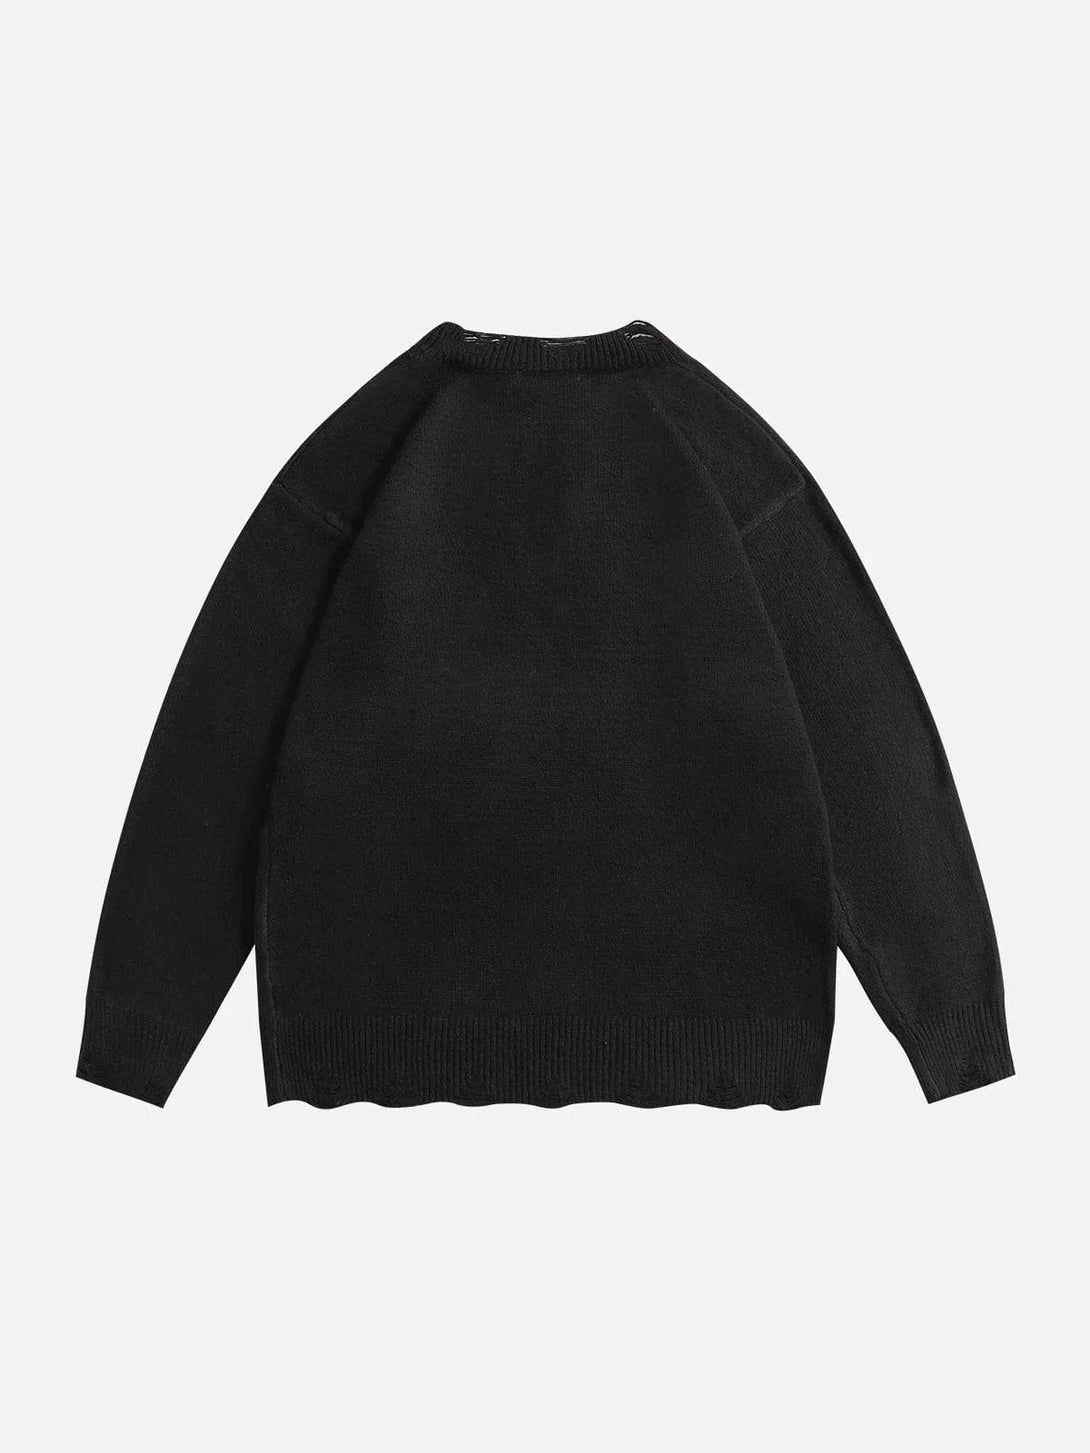 Majesda® - Flocked Bear Raw Edge Sweater outfit ideas streetwear fashion